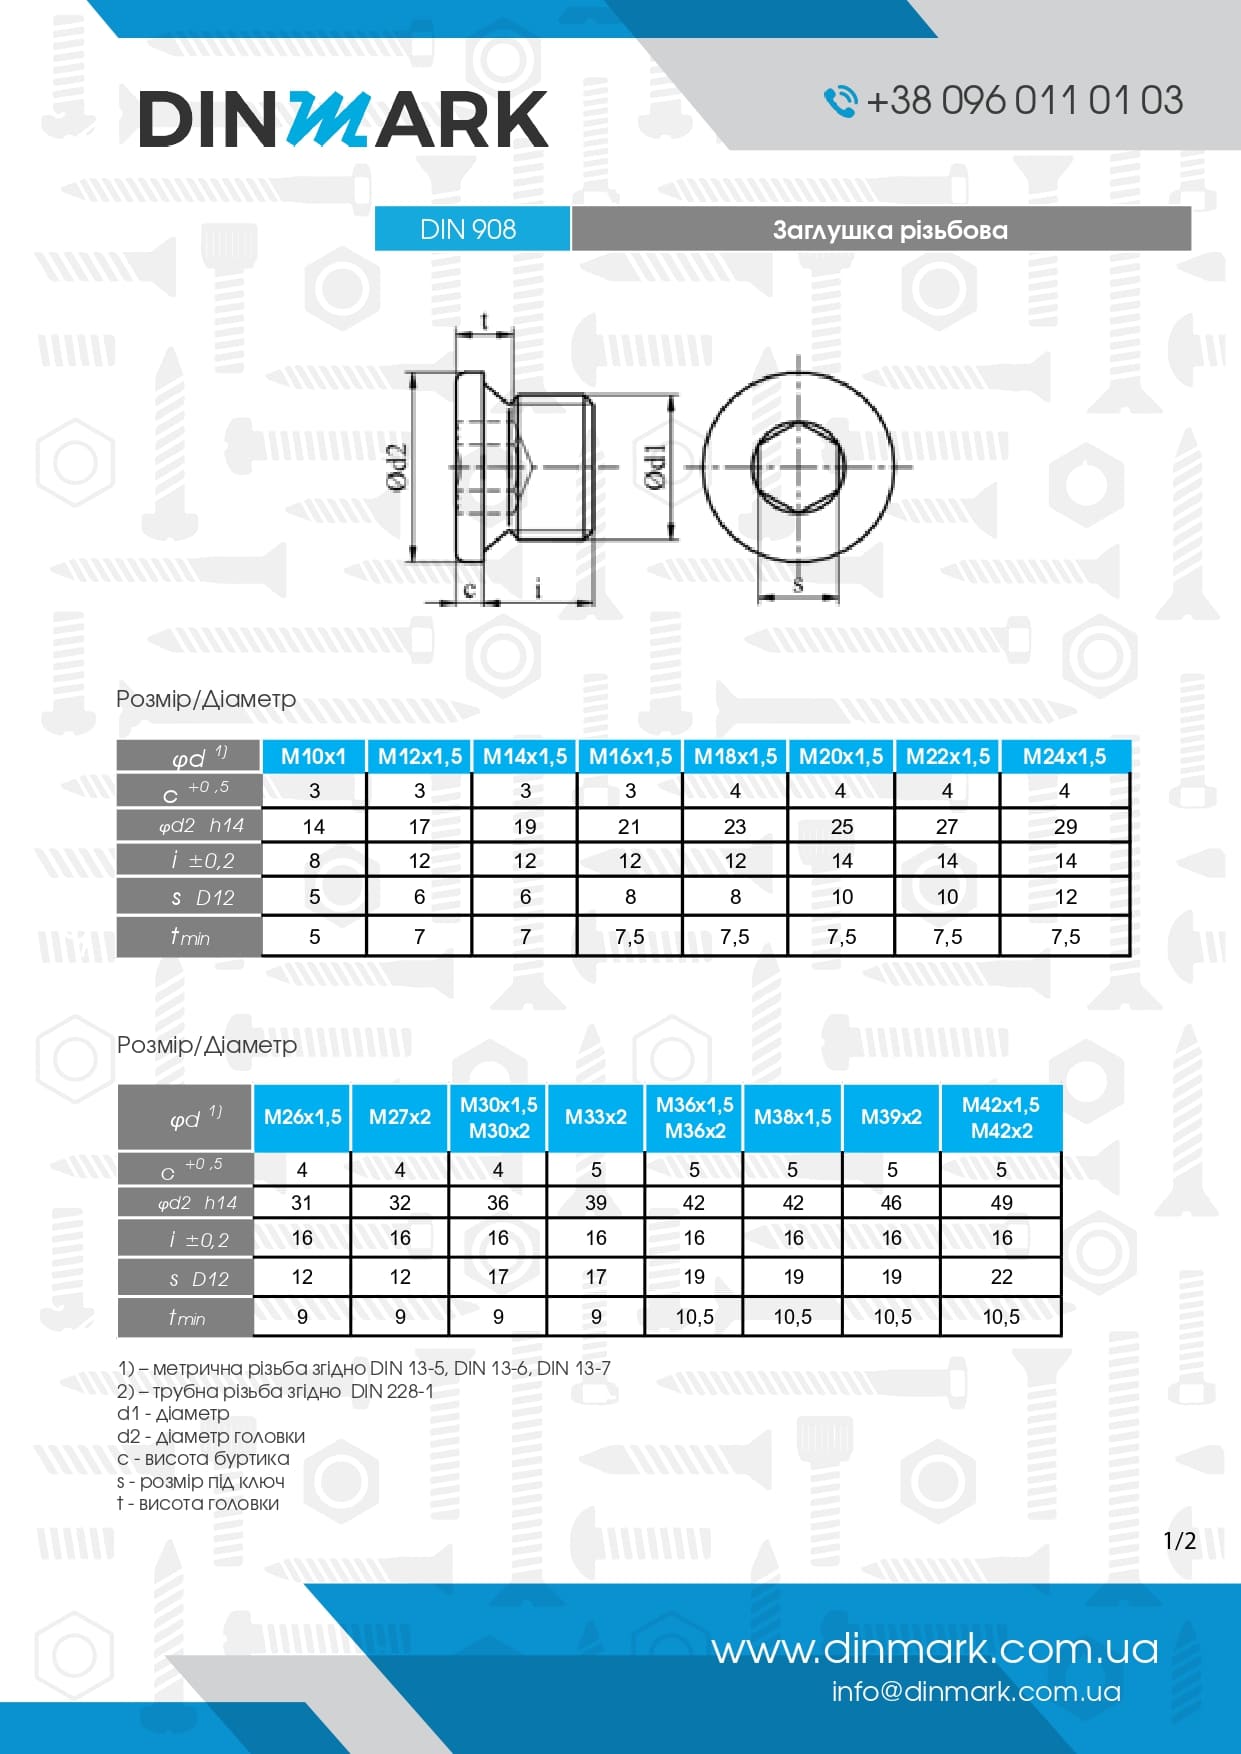 DIN 908 threaded cylindrical Cap with inch thread pdf